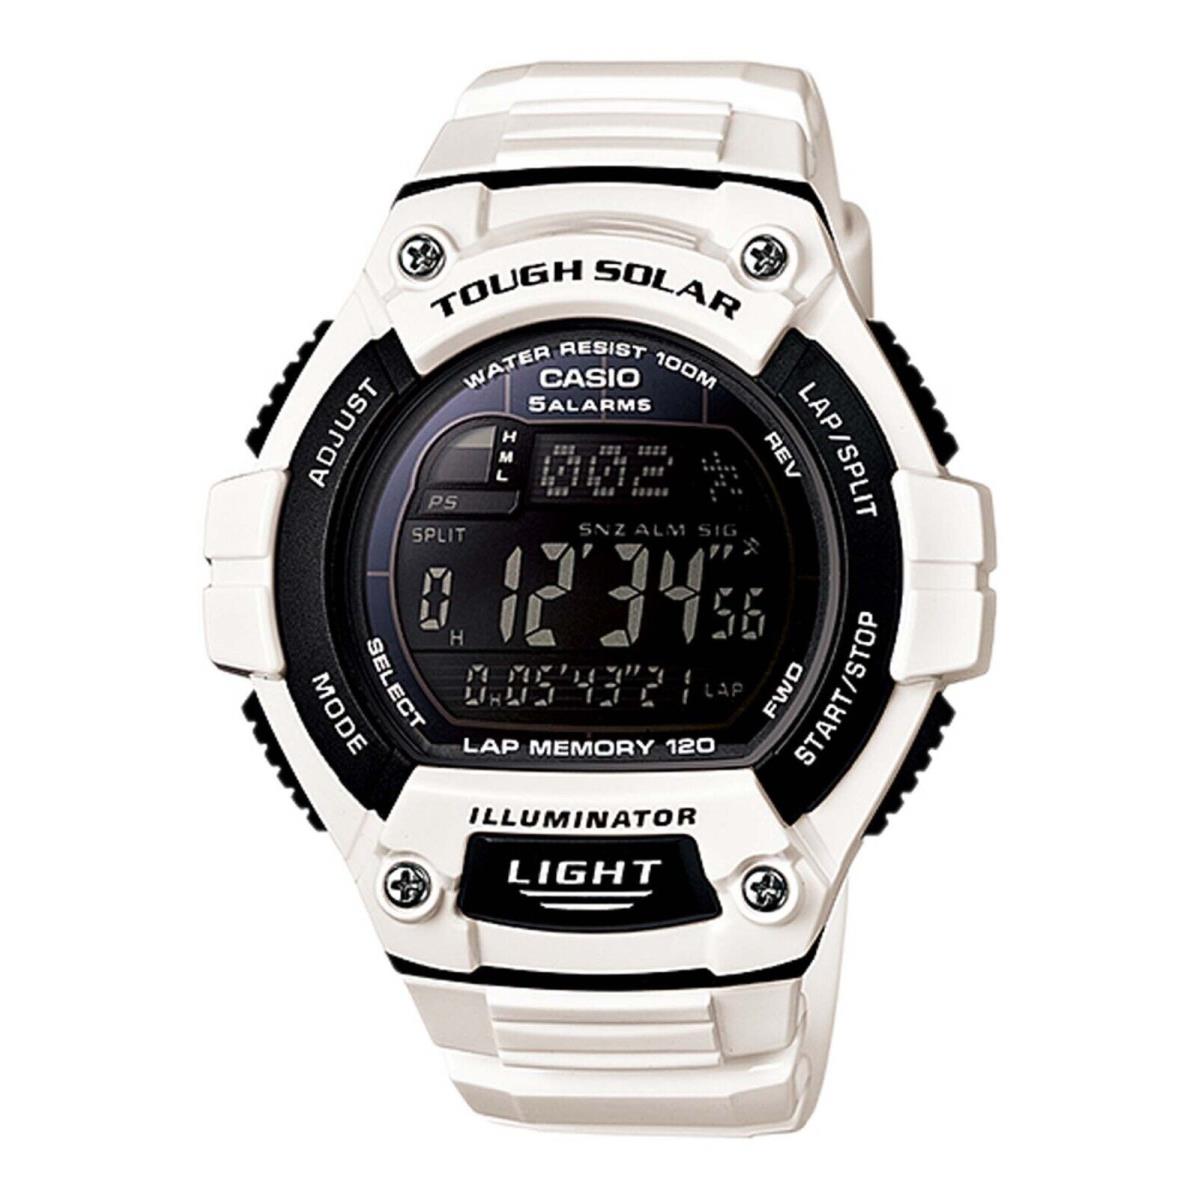 Casio Tough Solar Men`s Illuminator World Time 50mm Watch WS220C-7BV - Dial: Black, Band: White, Bezel: White